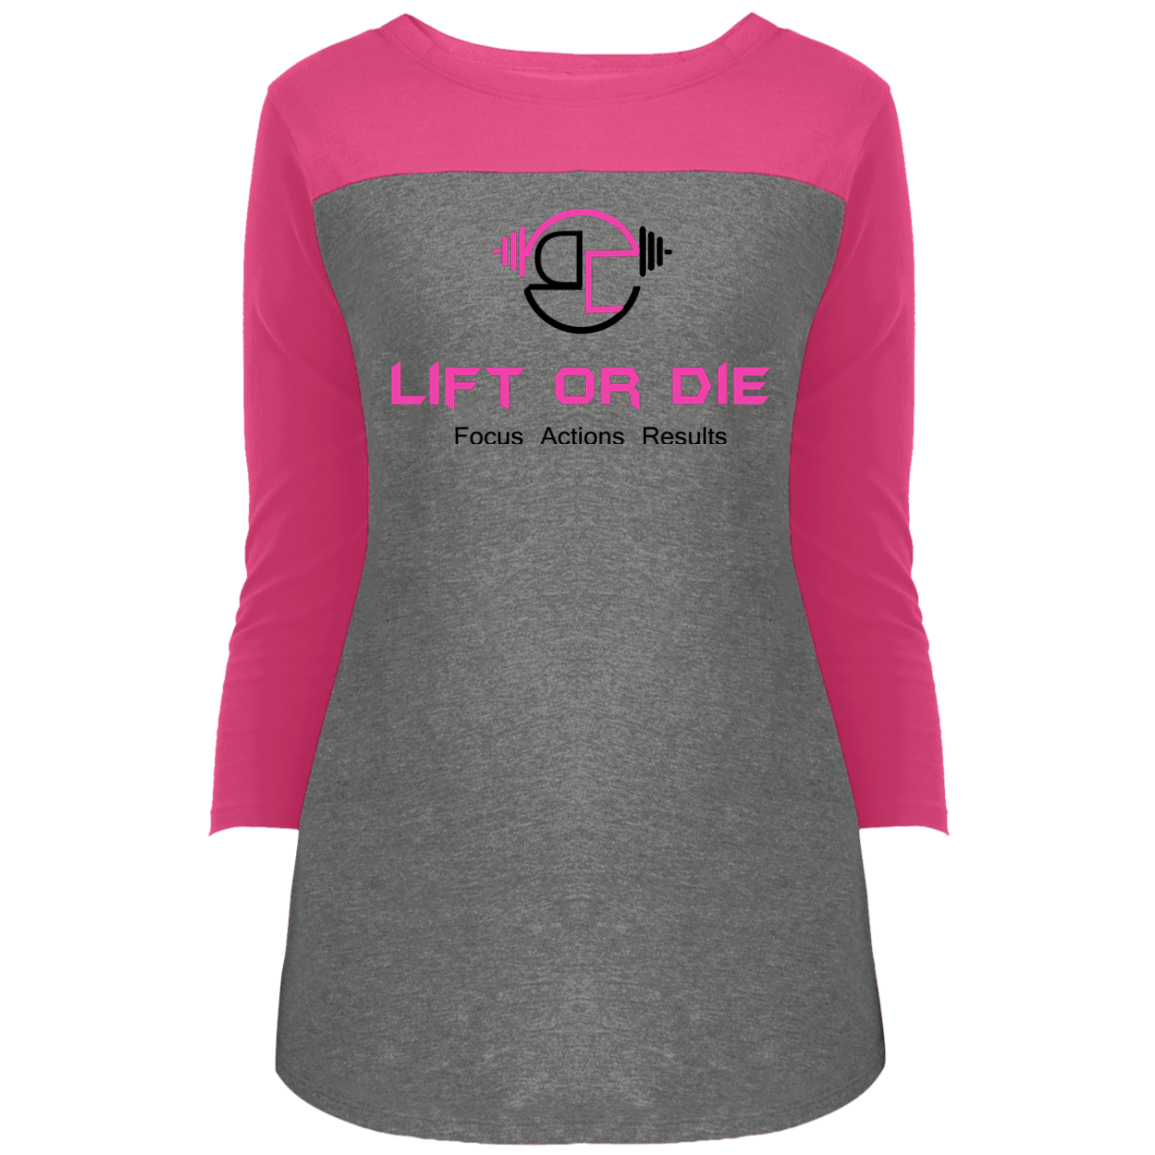 Lift or Die 3/4 Sleeve T-Shirt Blk